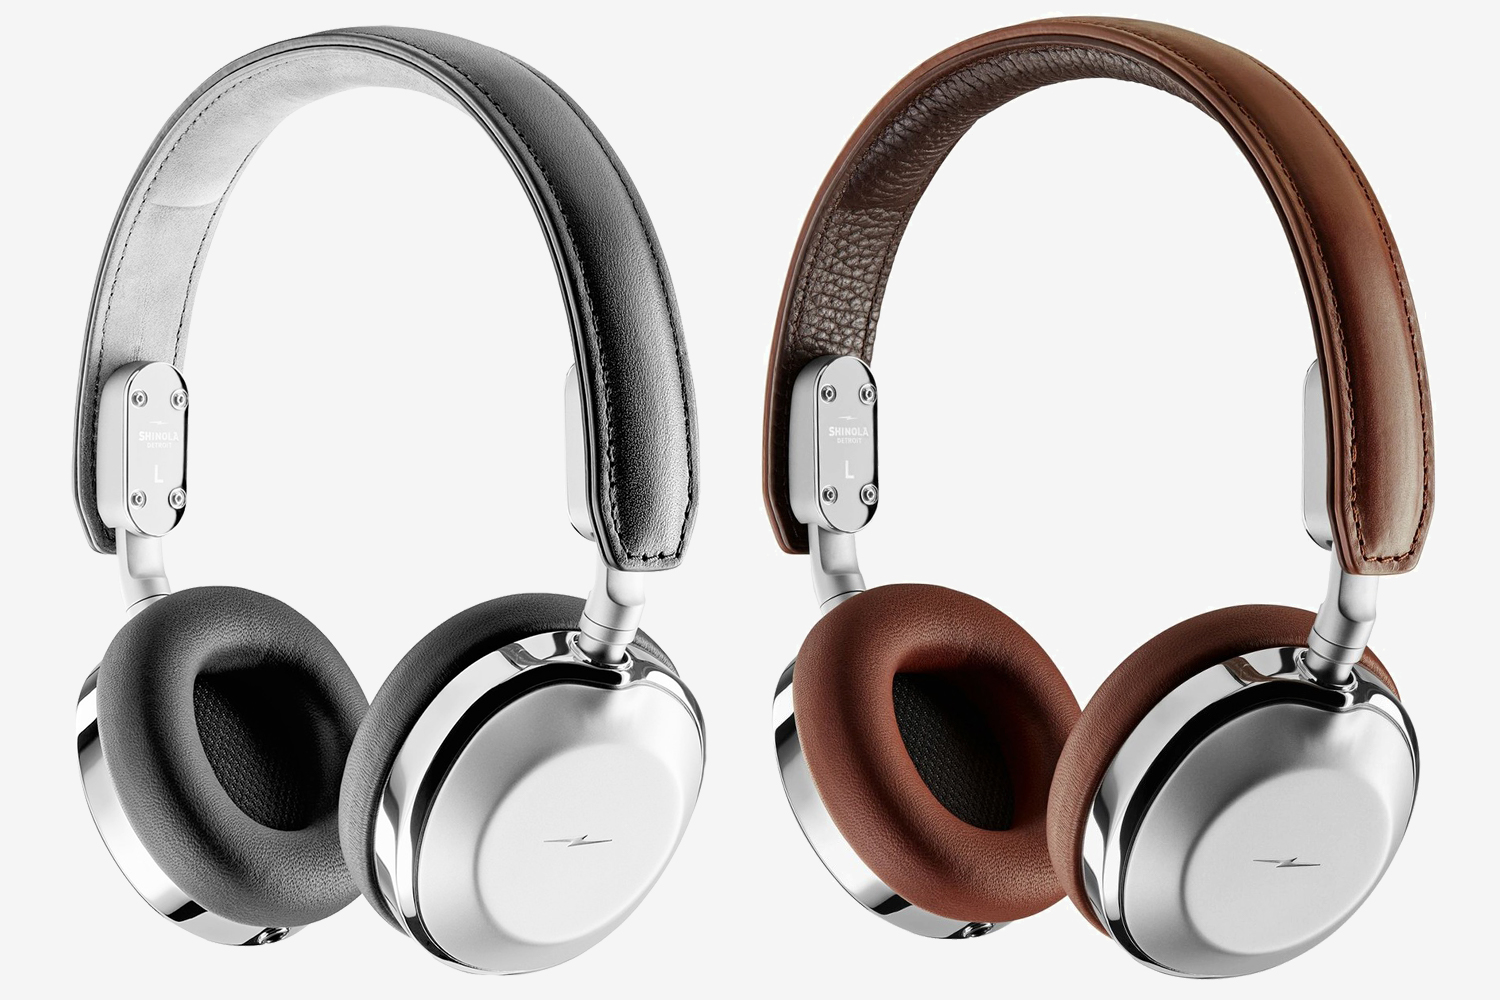 Take $300+ Off Shinola’s Headphones With This Last Chance Sale - InsideHook